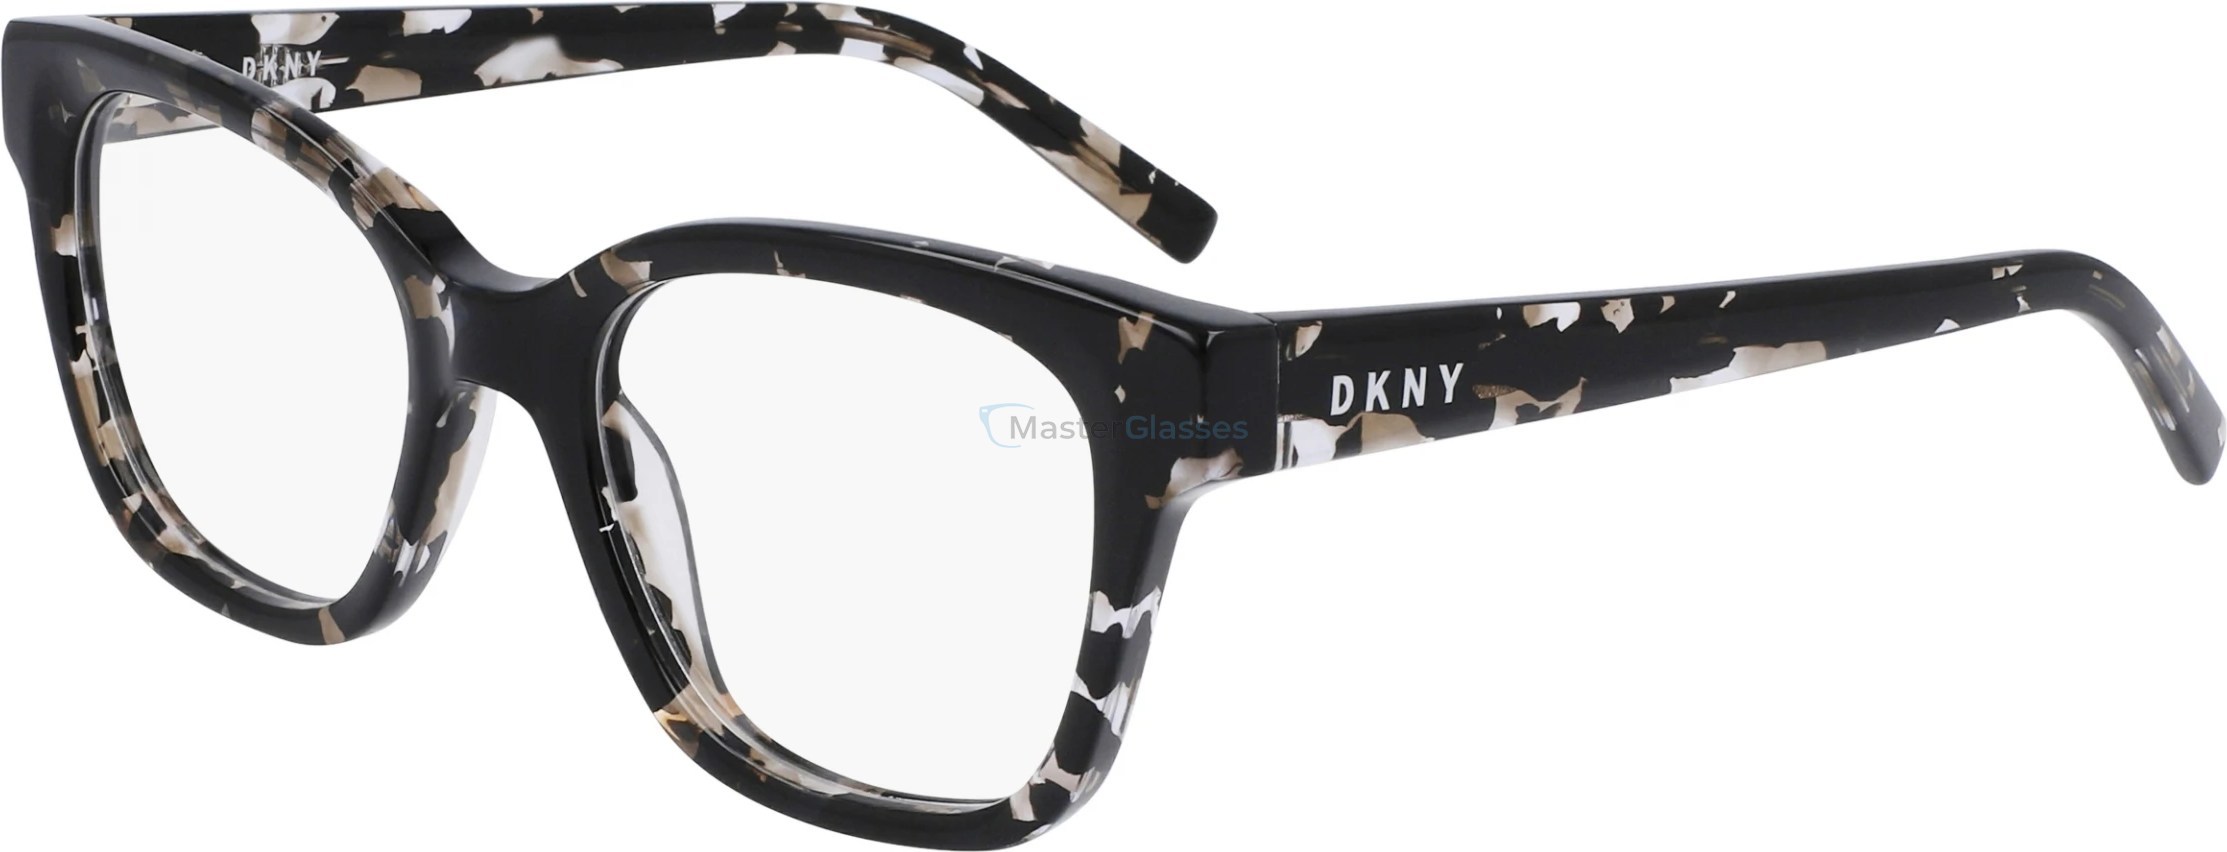  DKNY DK5048 010,  BLACK TORTOISE, CLEAR